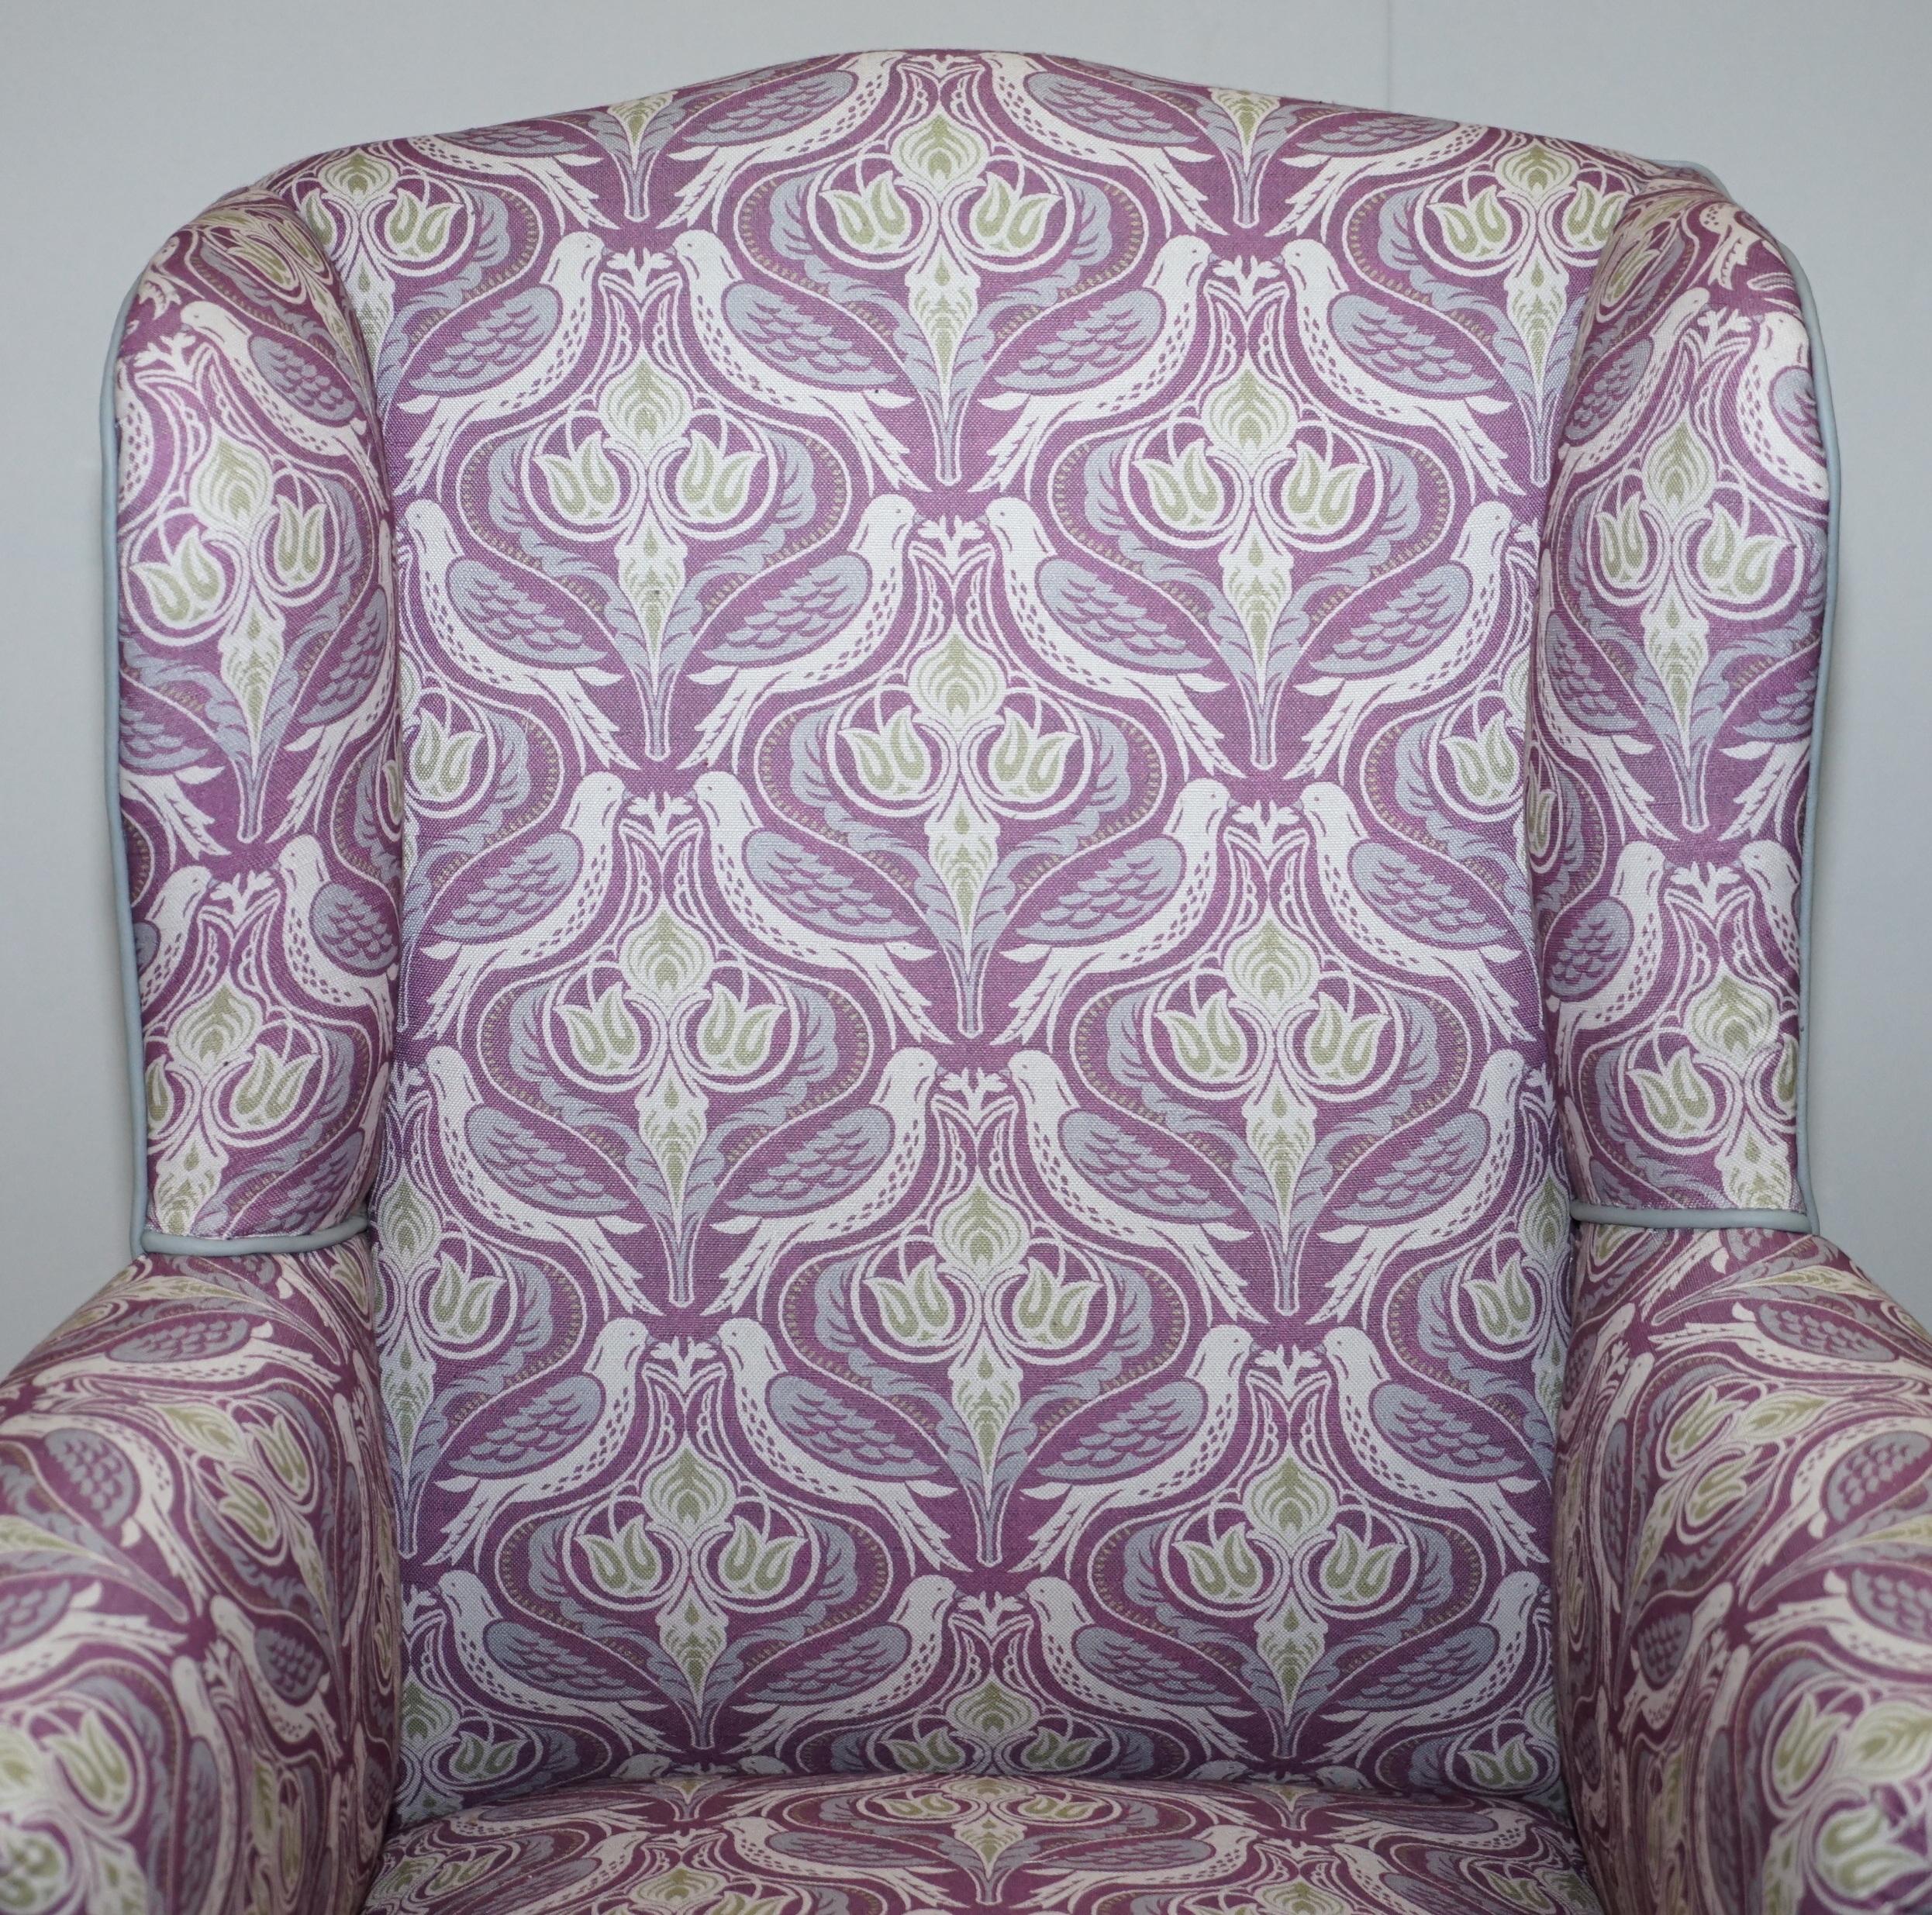 purple wingback chair